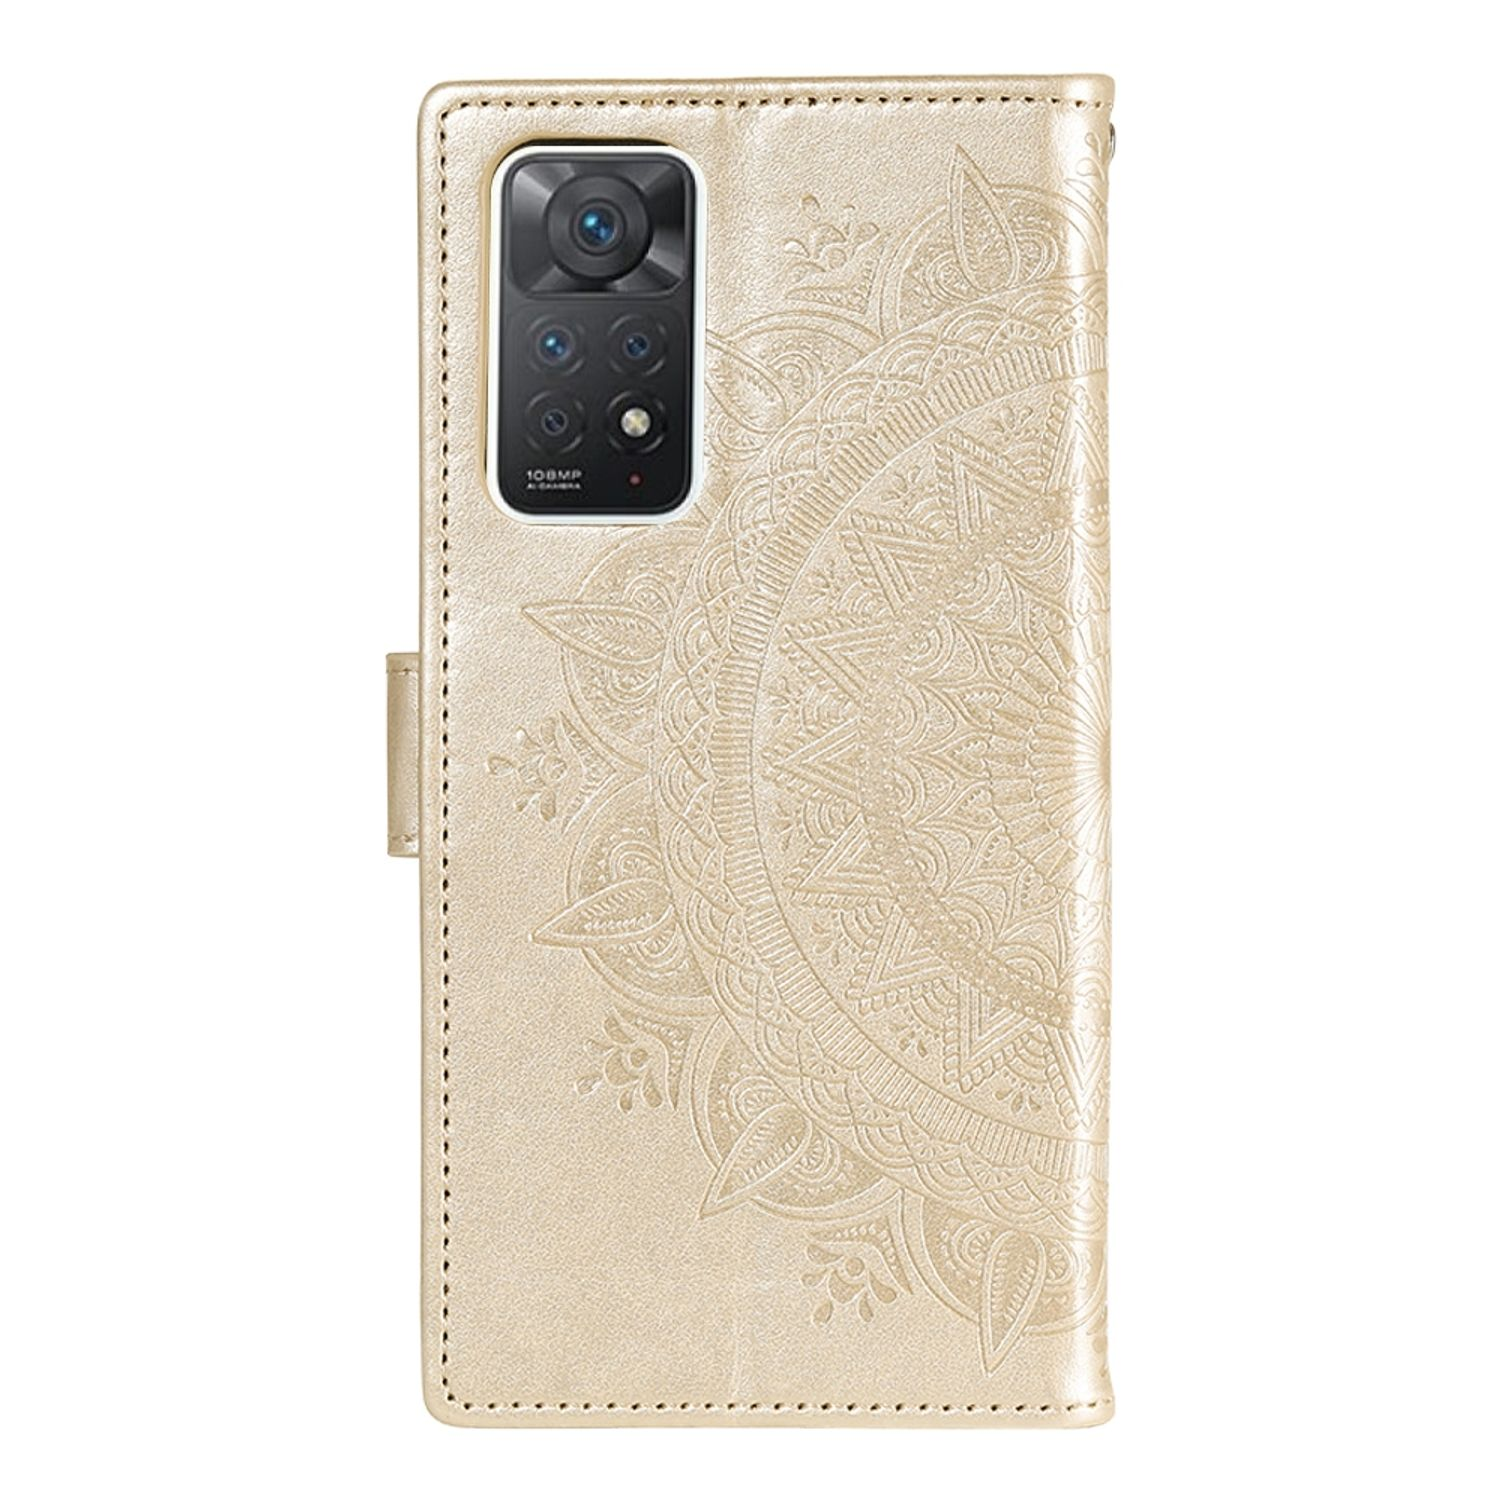 Pro+ Gold Pro 11 / Note Book 5G, Xiaomi, Case, DESIGN KÖNIG Note Bookcover, 11 Redmi